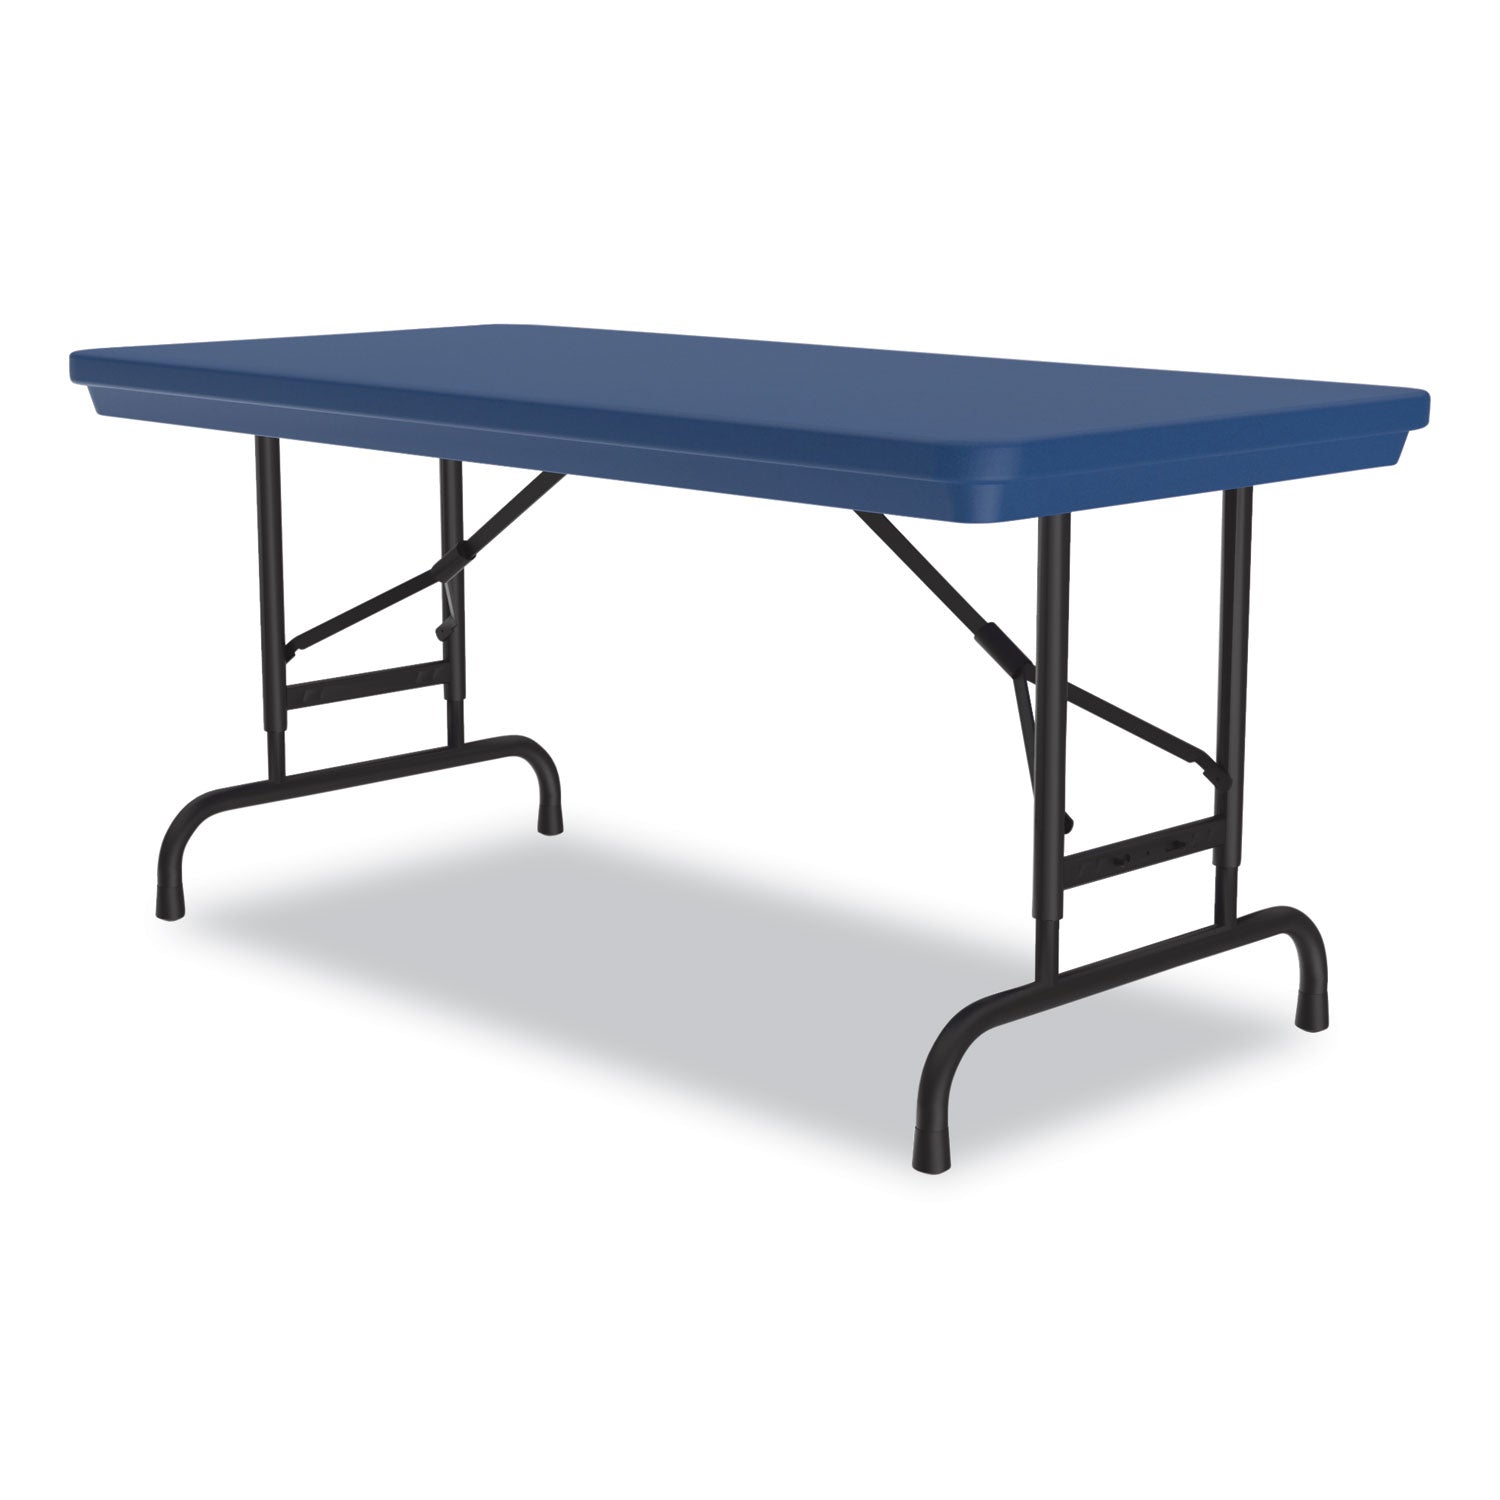 adjustable-folding-table-rectangular-48-x-24-x-22-to-32-blue-top-black-legs-4-pallet-ships-in-4-6-business-days_crlra2448274p - 5